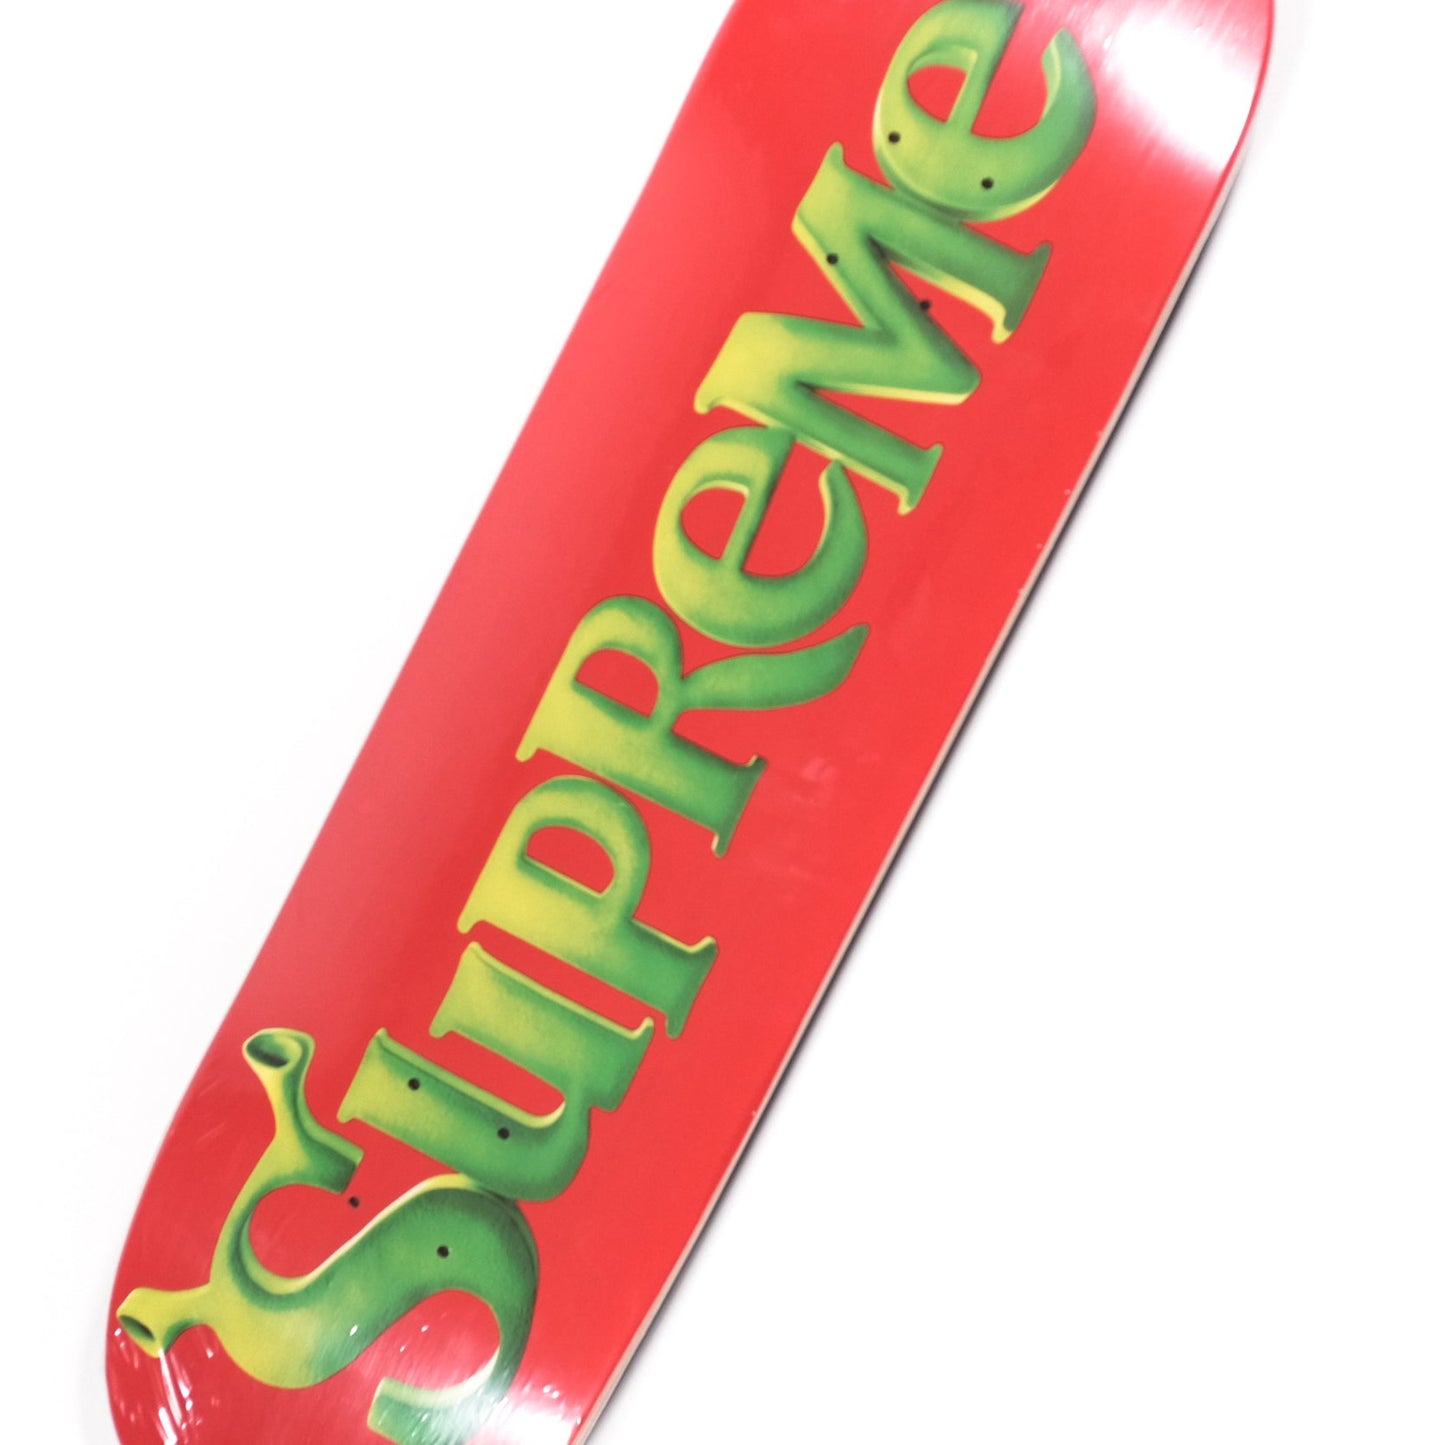 Supreme Shrek Skateboard Deck